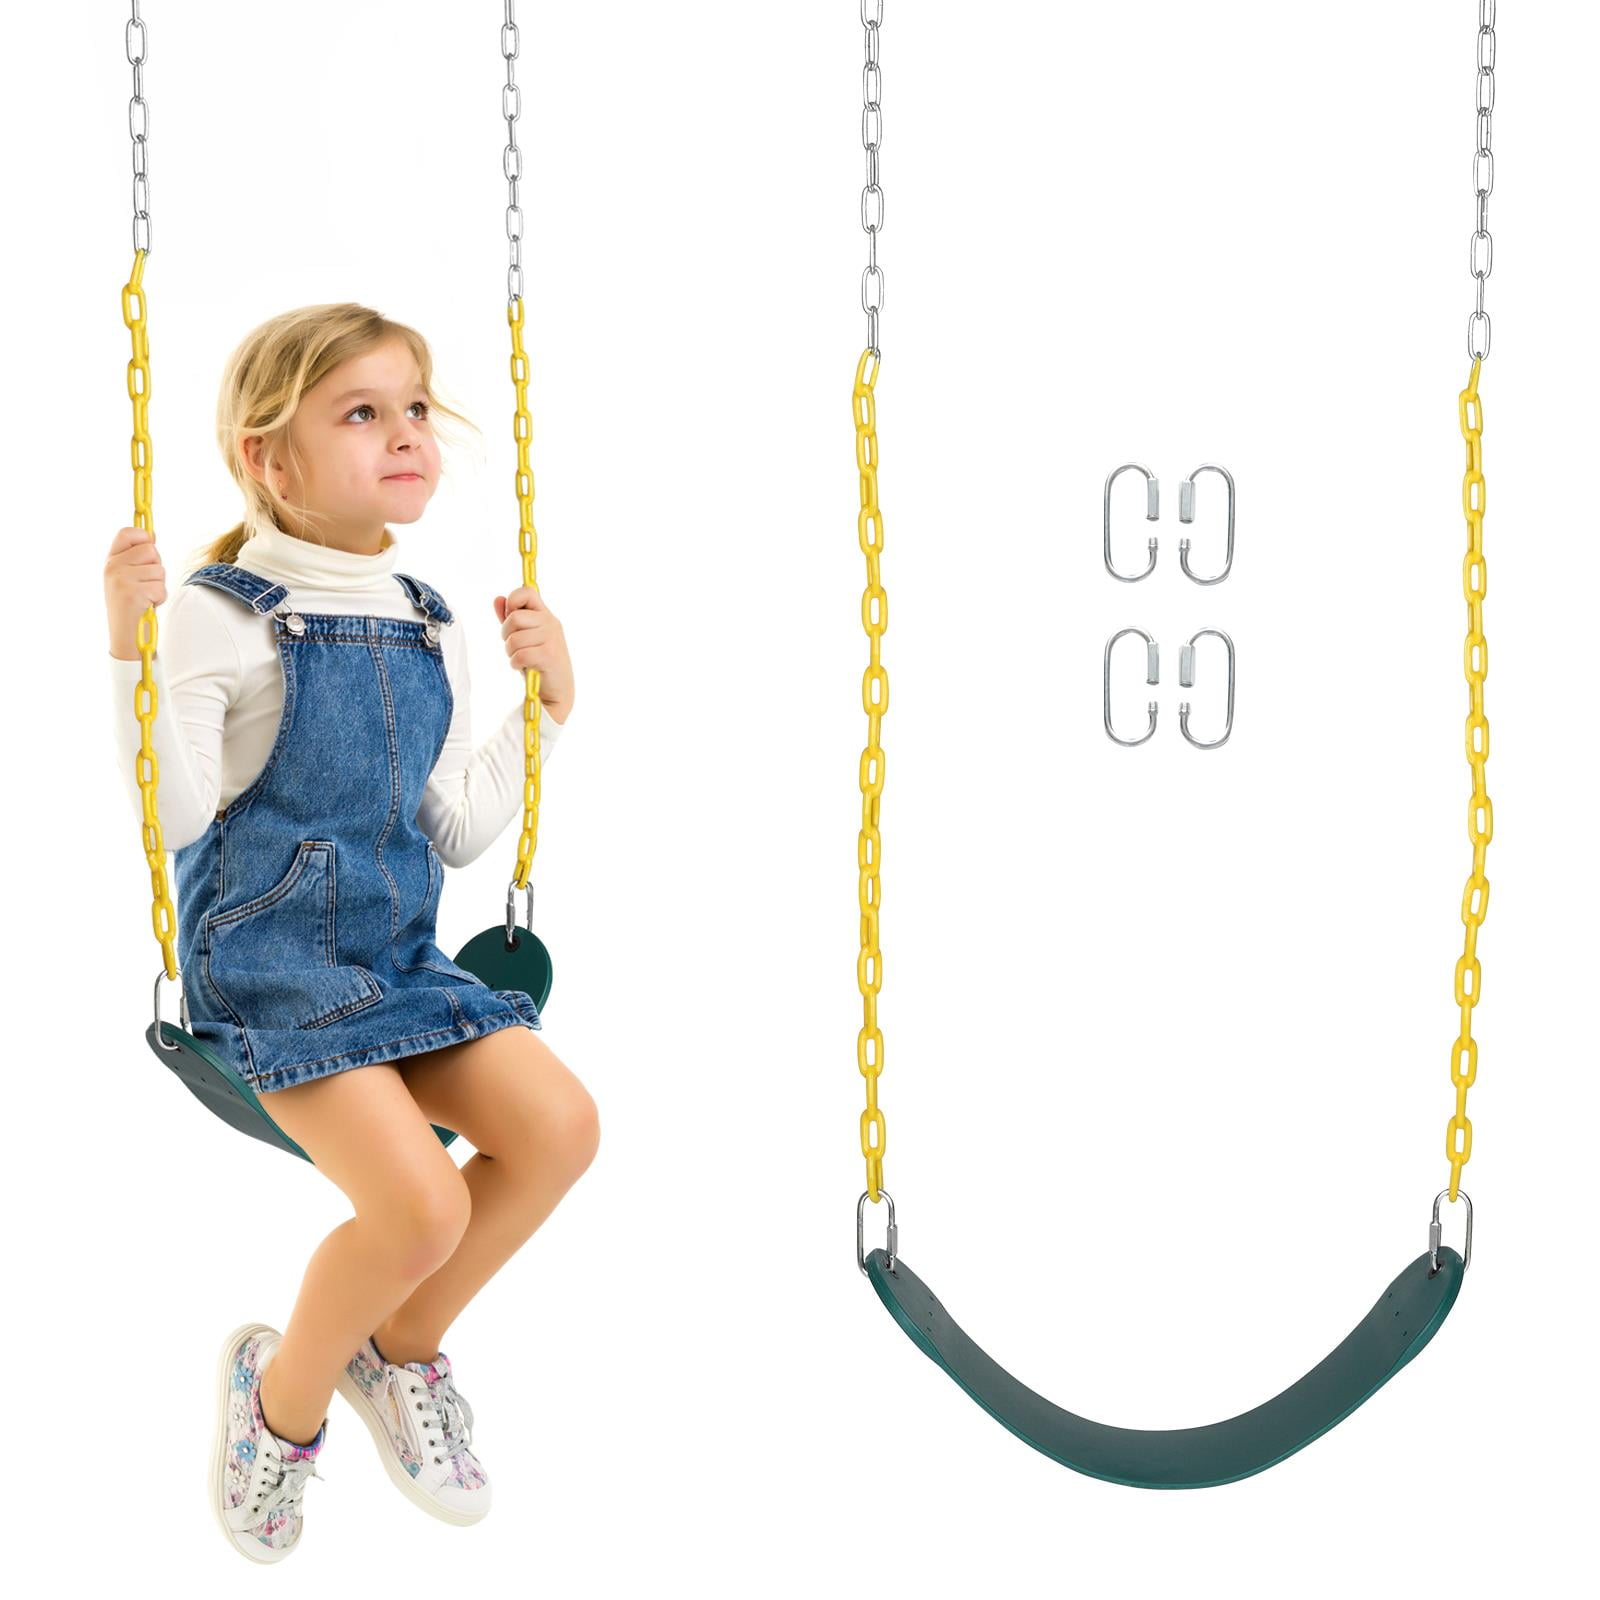 Plastic Heavy Duty Swing Seat Swing Set Accessories Replacement Blue 2x Metal 